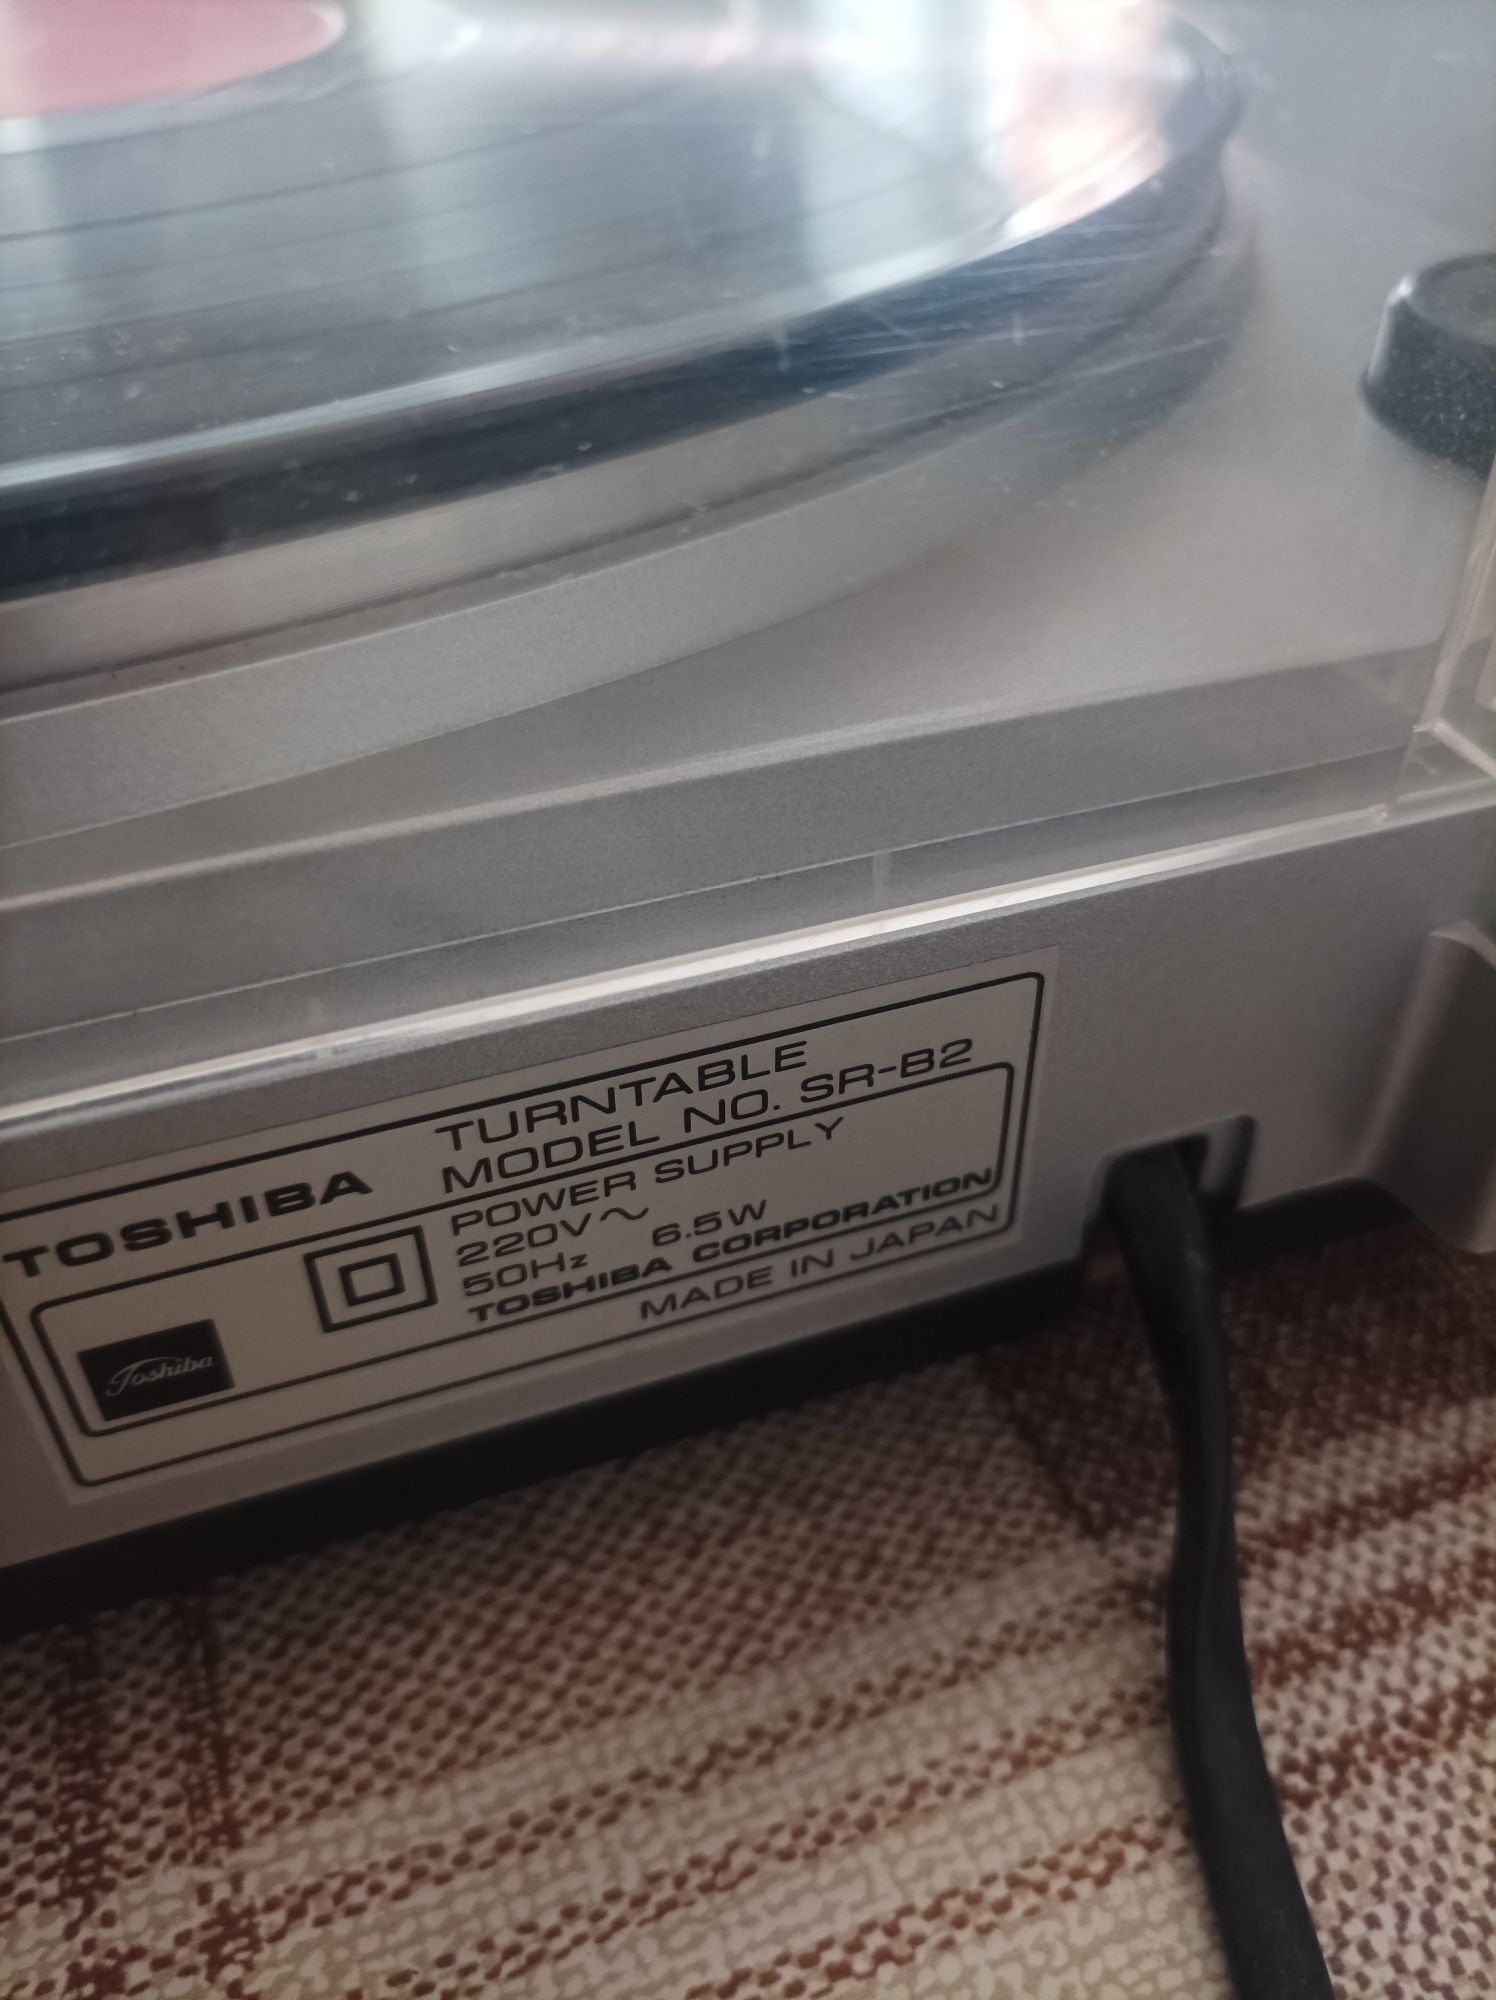 Gramofon Toshiba Bel Driwe Automatic SR-B2 vintage